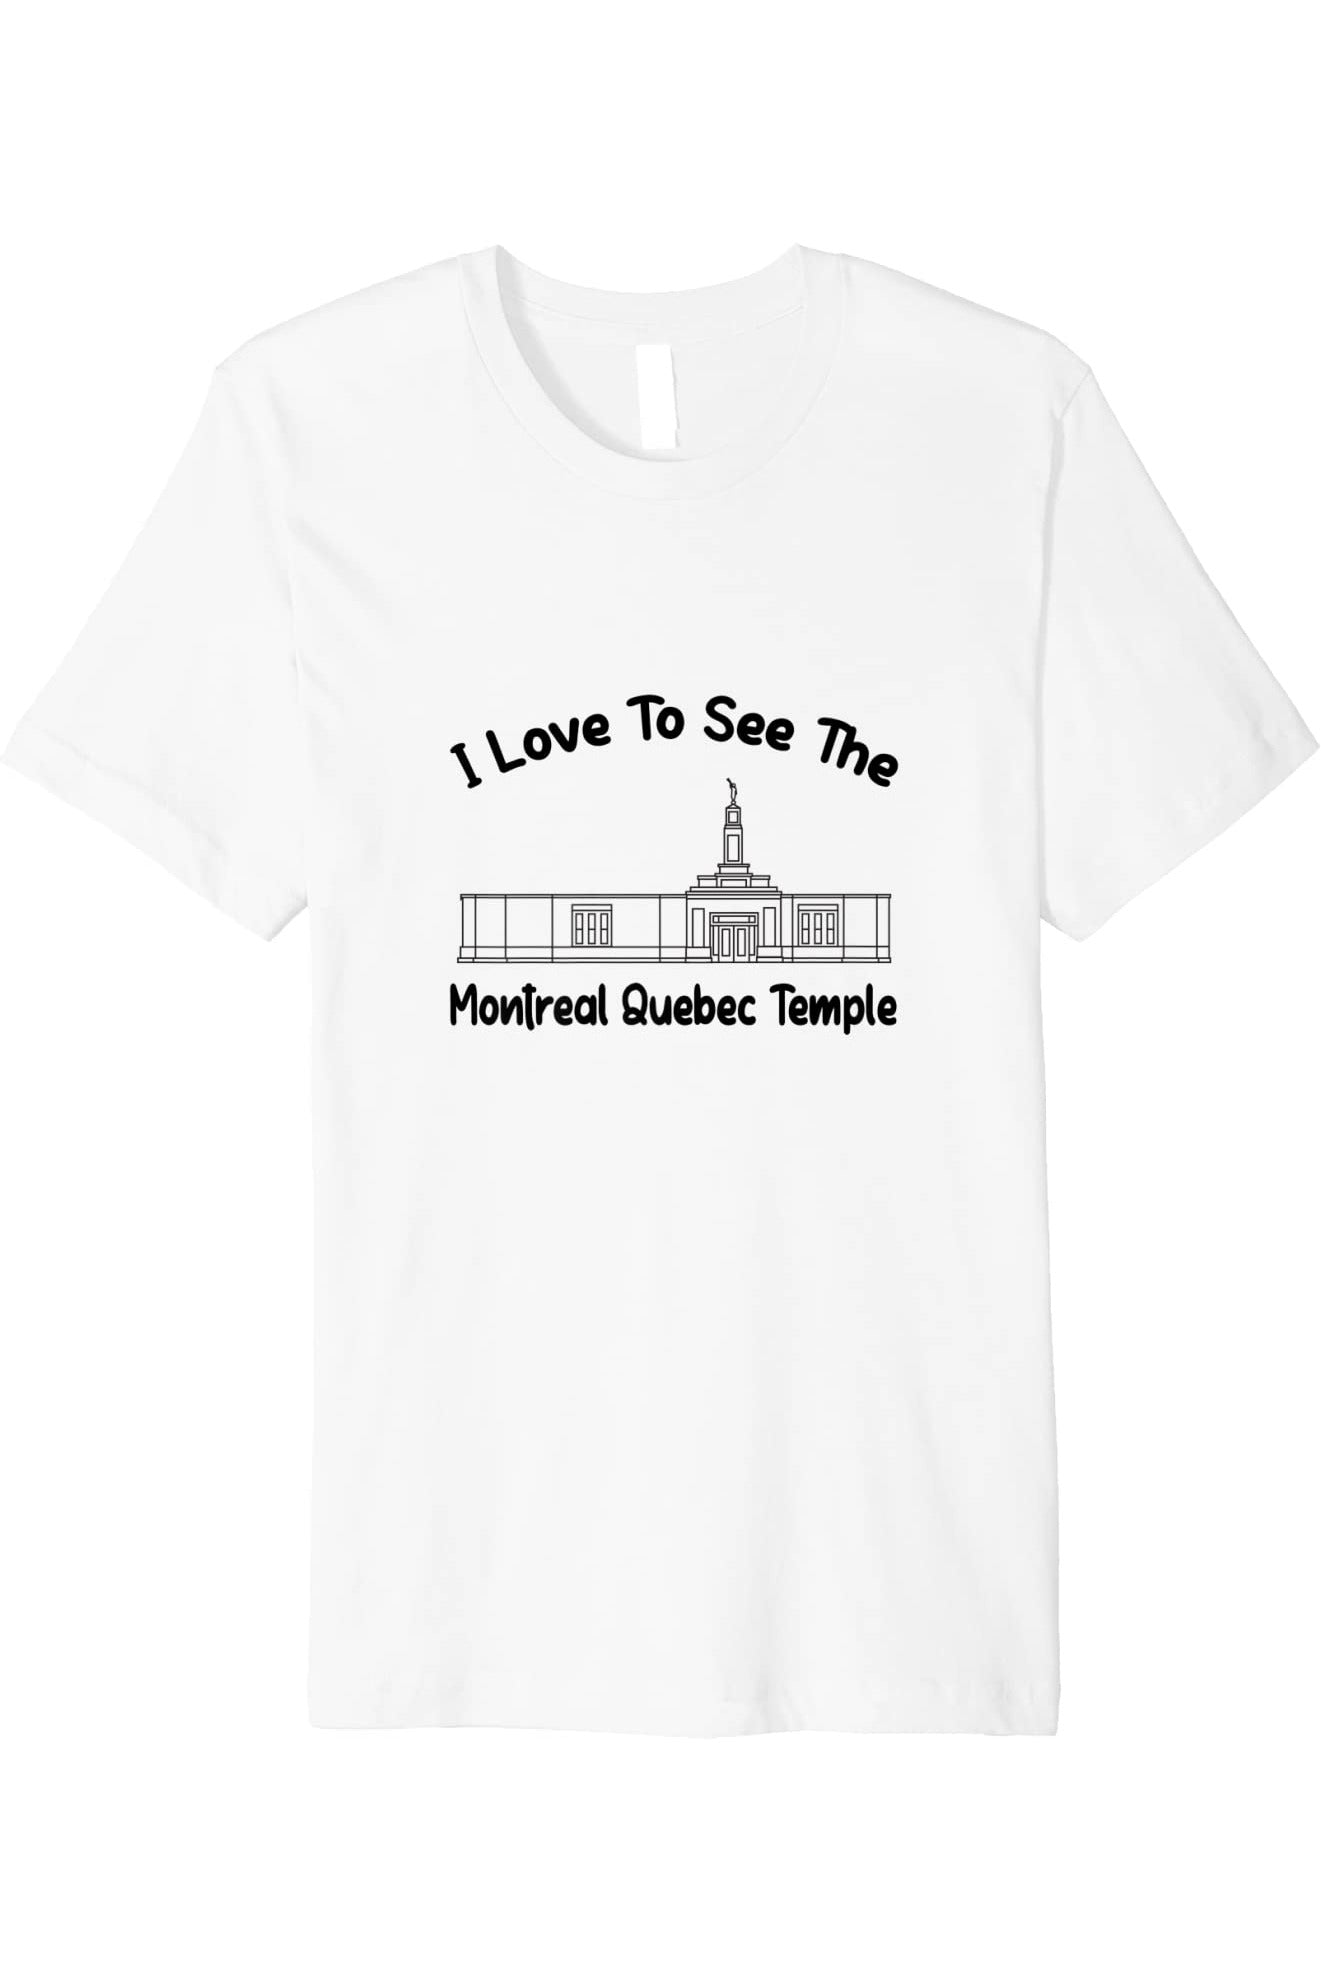 Montreal Quebec Temple T-Shirt - Premium - Primary Style (English) US